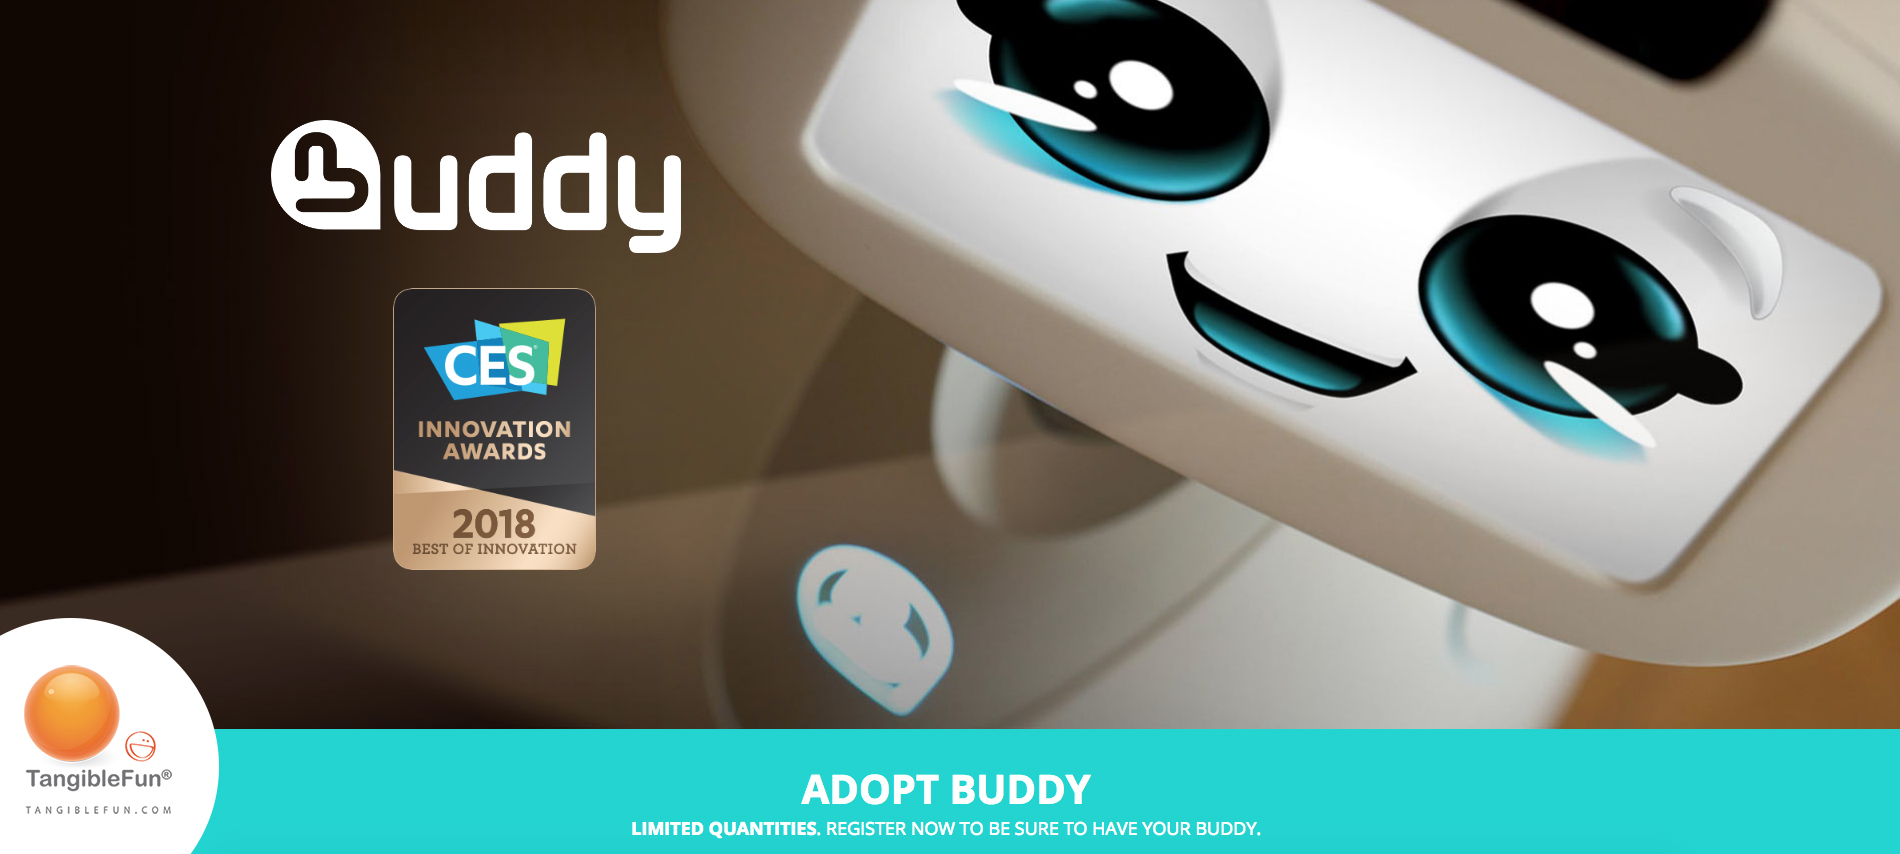 Social Robot Buddy